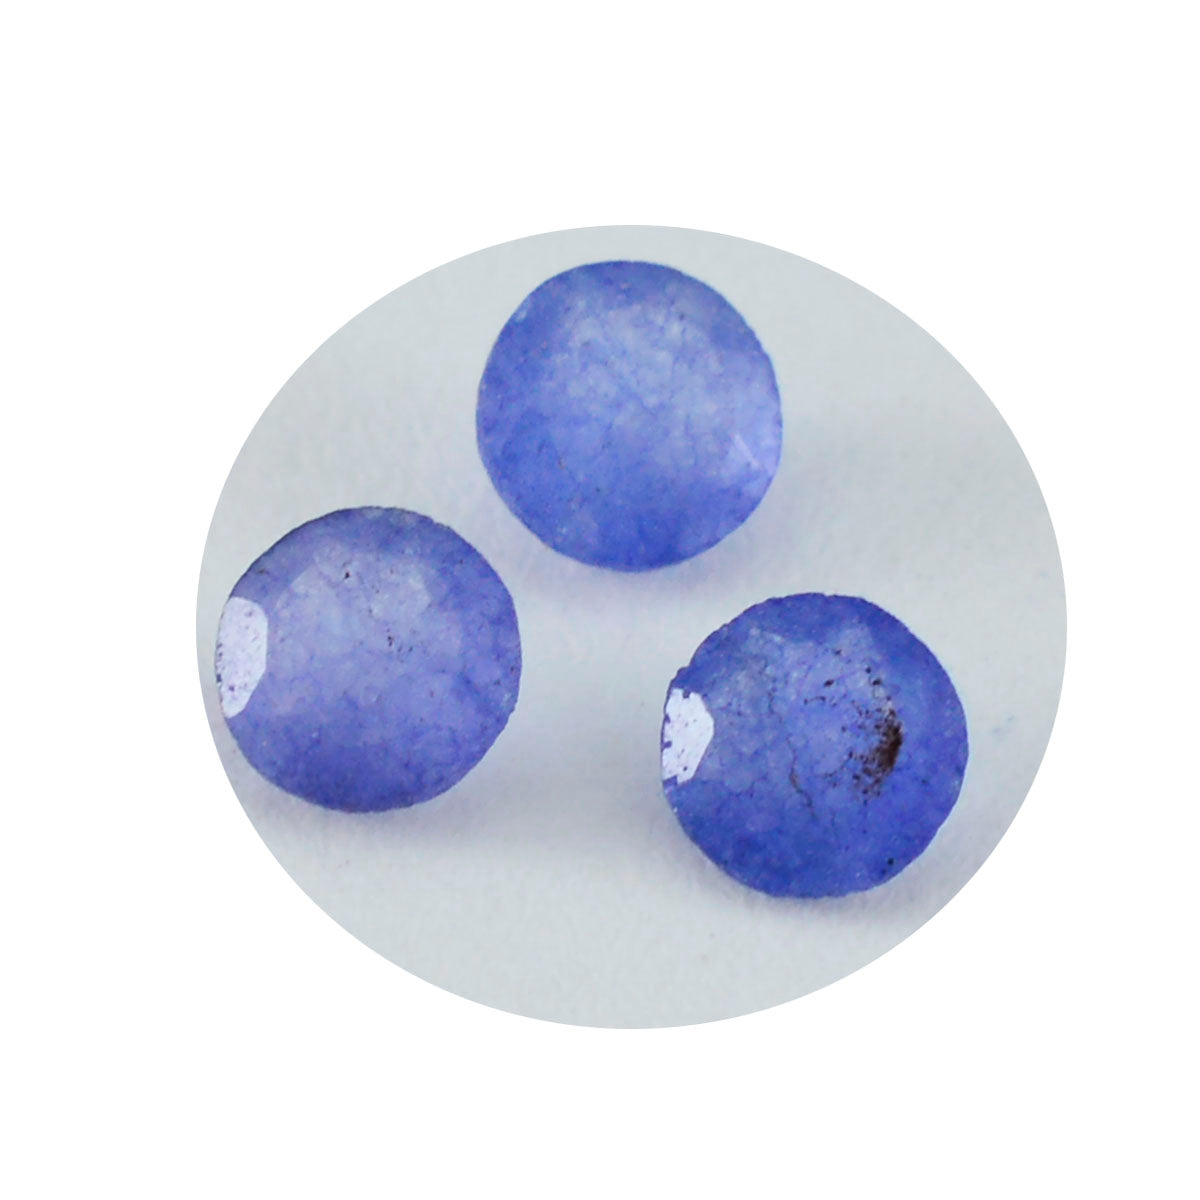 Riyogems 1PC Natural Blue Jasper Faceted 8x8 mm Round Shape A Quality Loose Gems